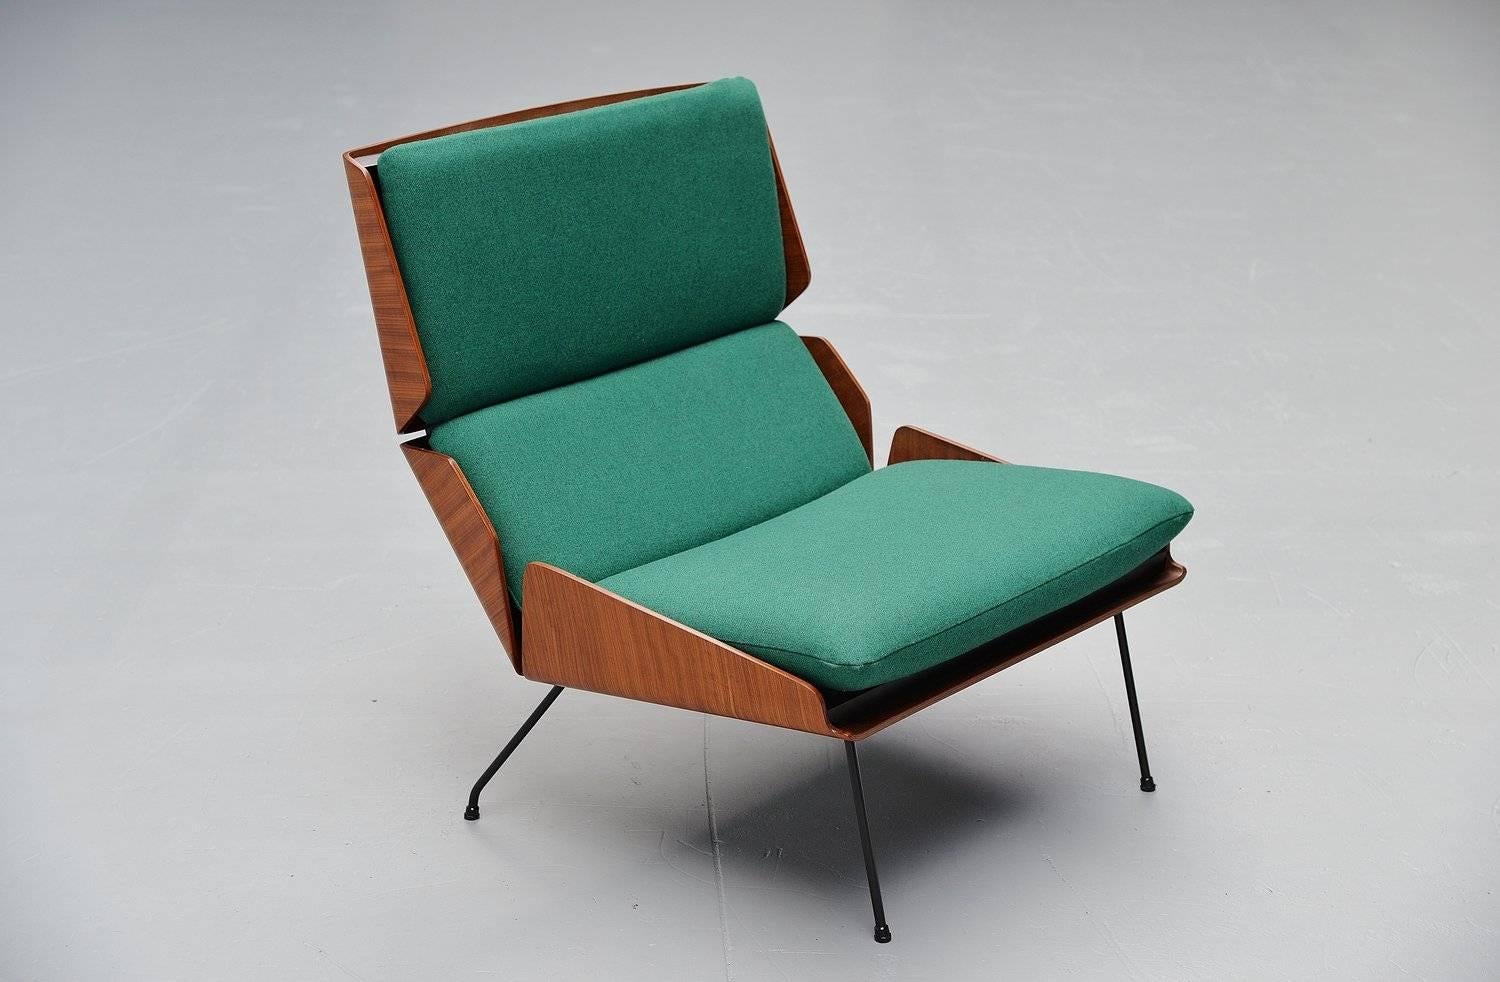 Fabric Georges van Rijck Beaufort Lounge Chair, Belgium, 1959